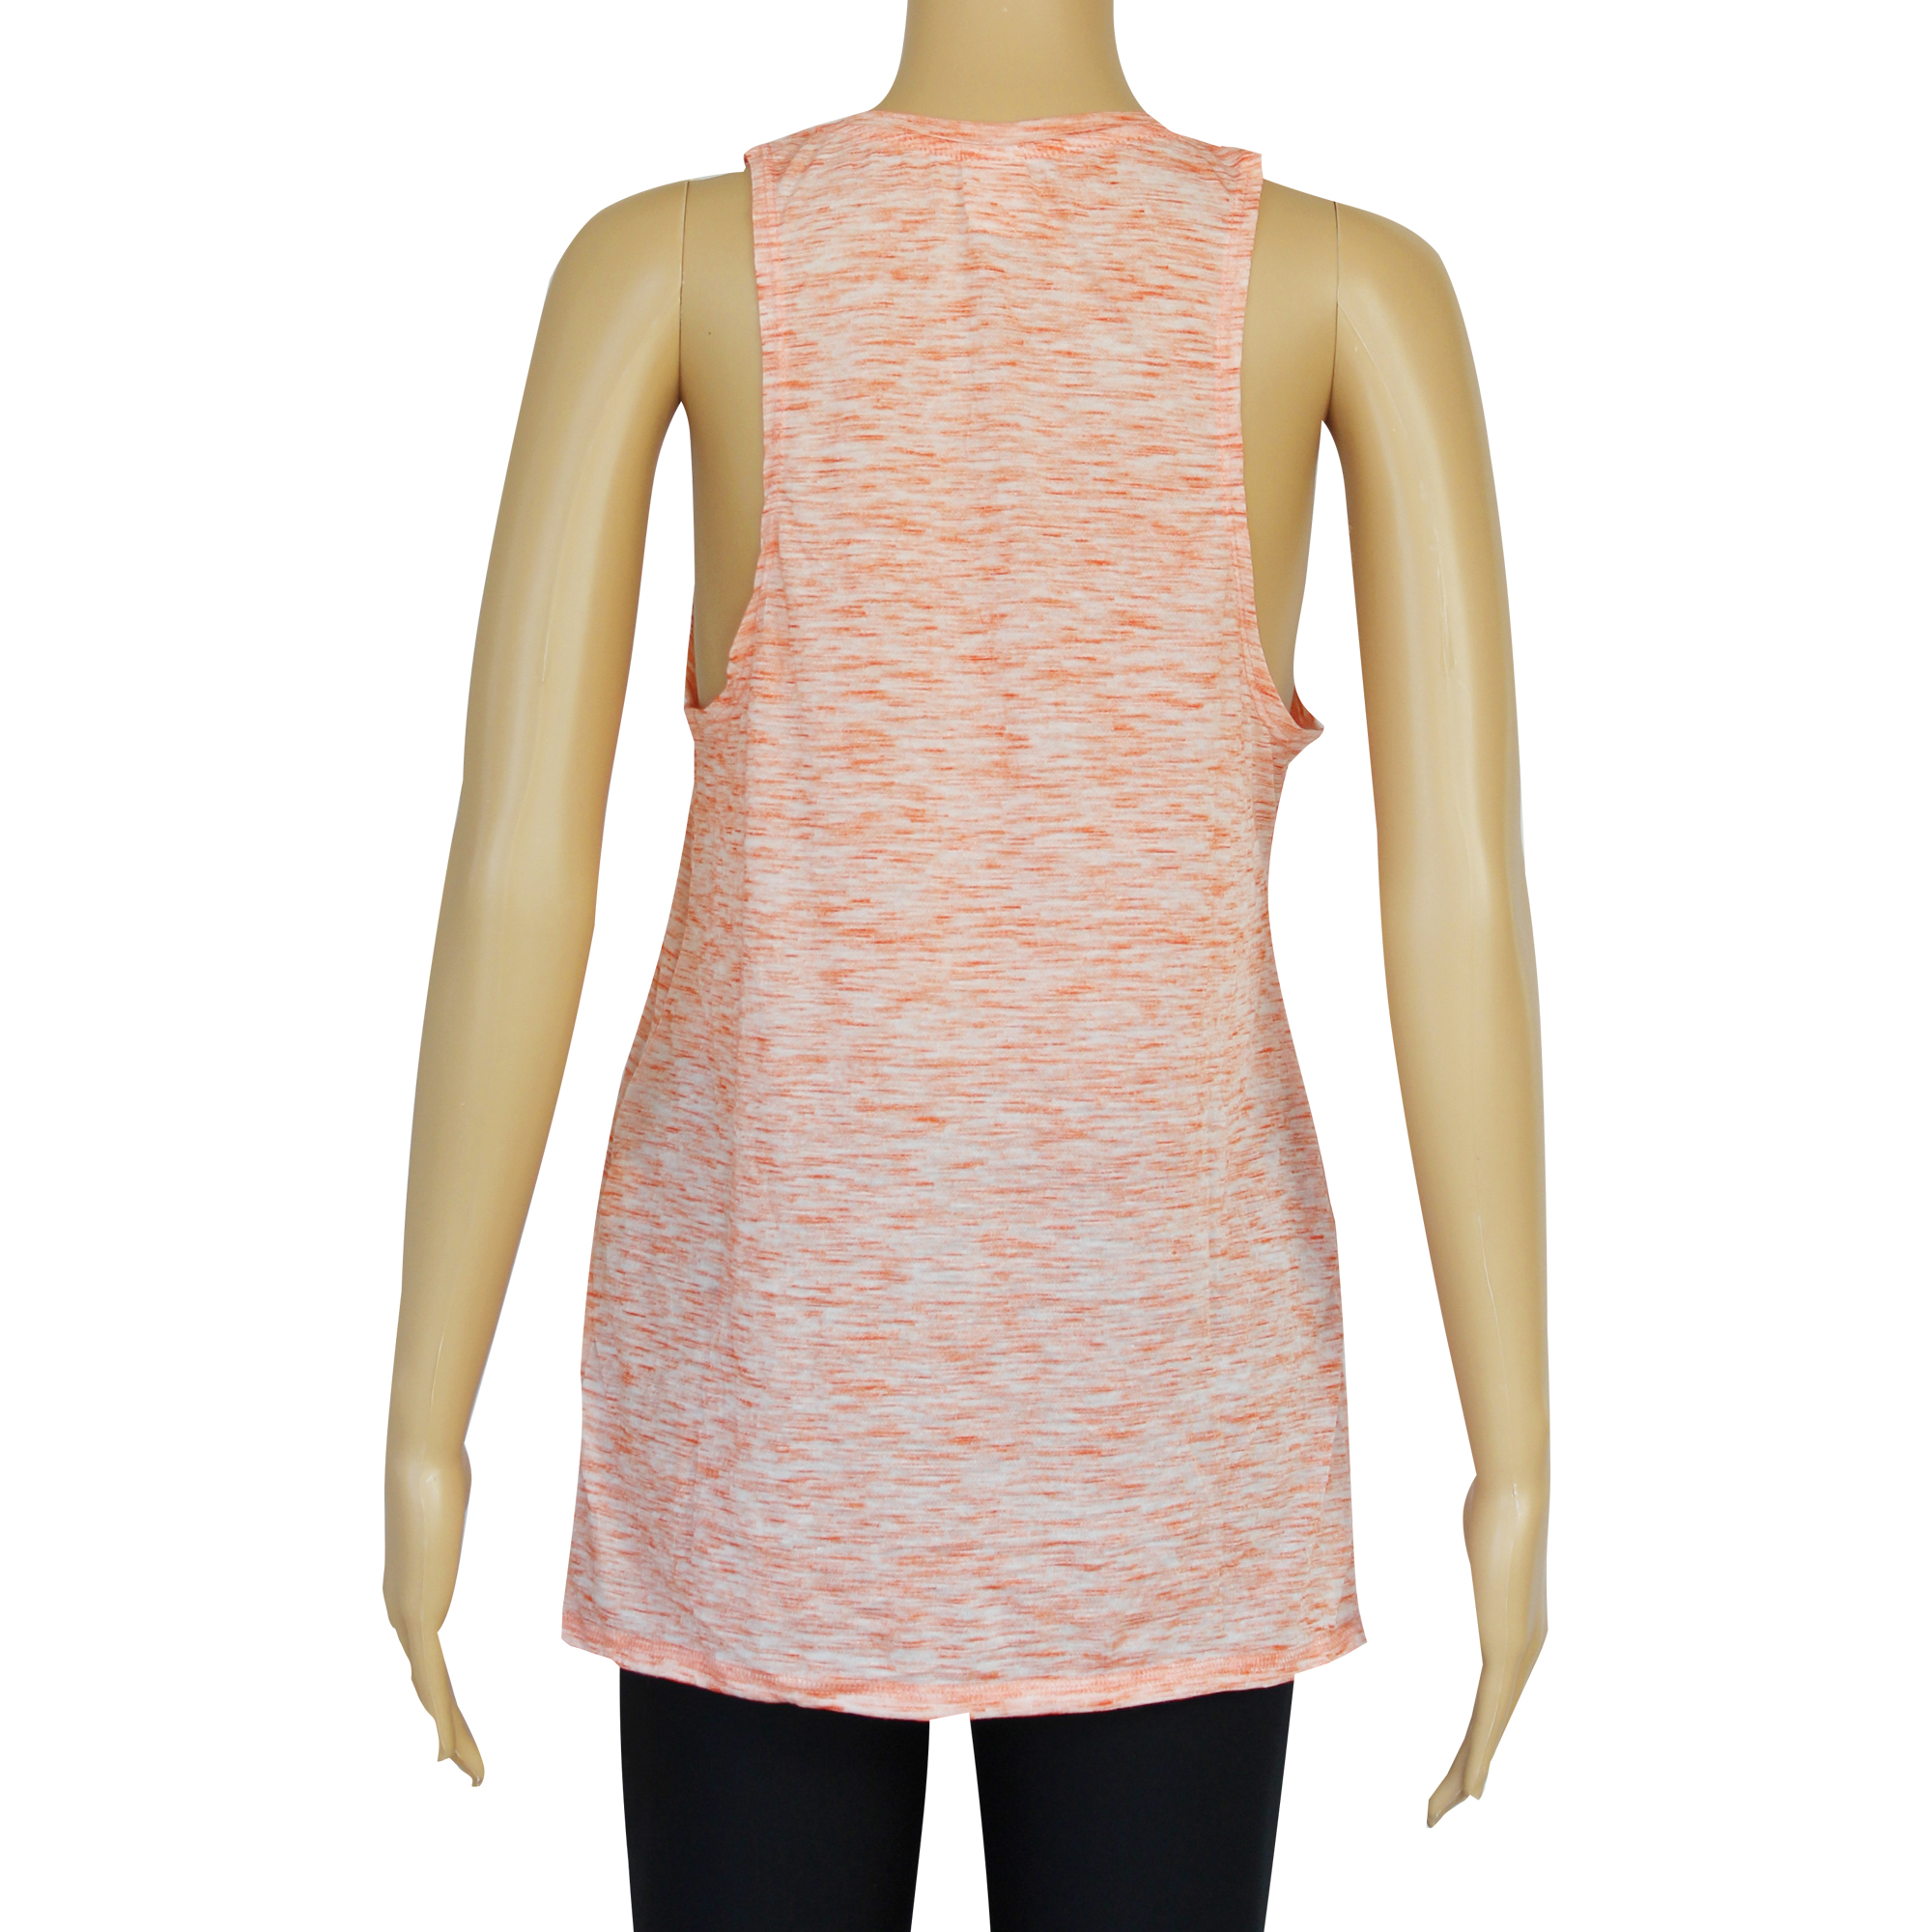 Women's Yoga Tank Tops Activewear Tops Long Workout Shirts Racerback Quick Dry Orange - S - image 3 of 4